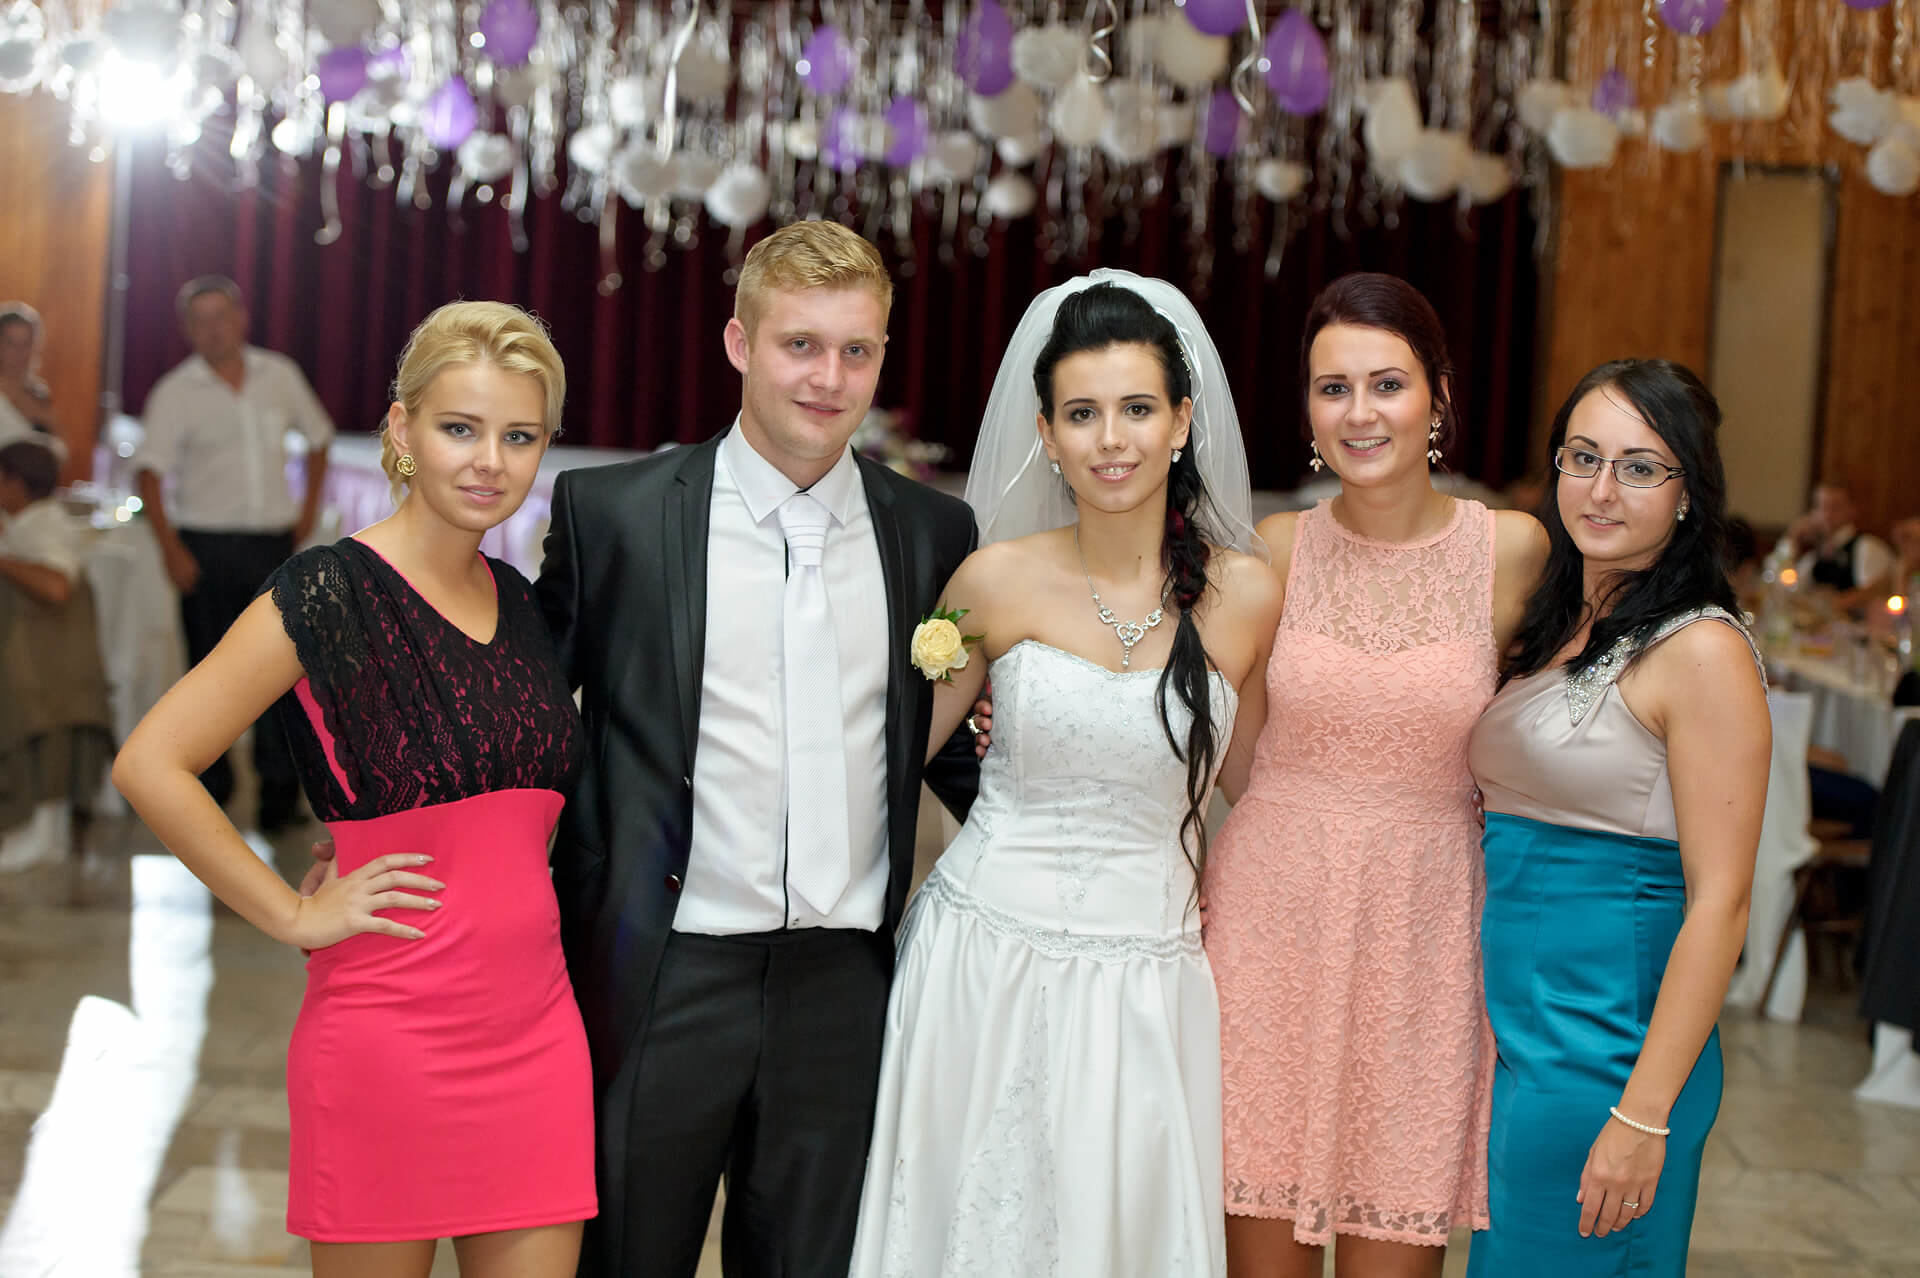 svadba svadobny zabava hostina profesionalne fotenie fotograf Peter Norulak Kosice__07